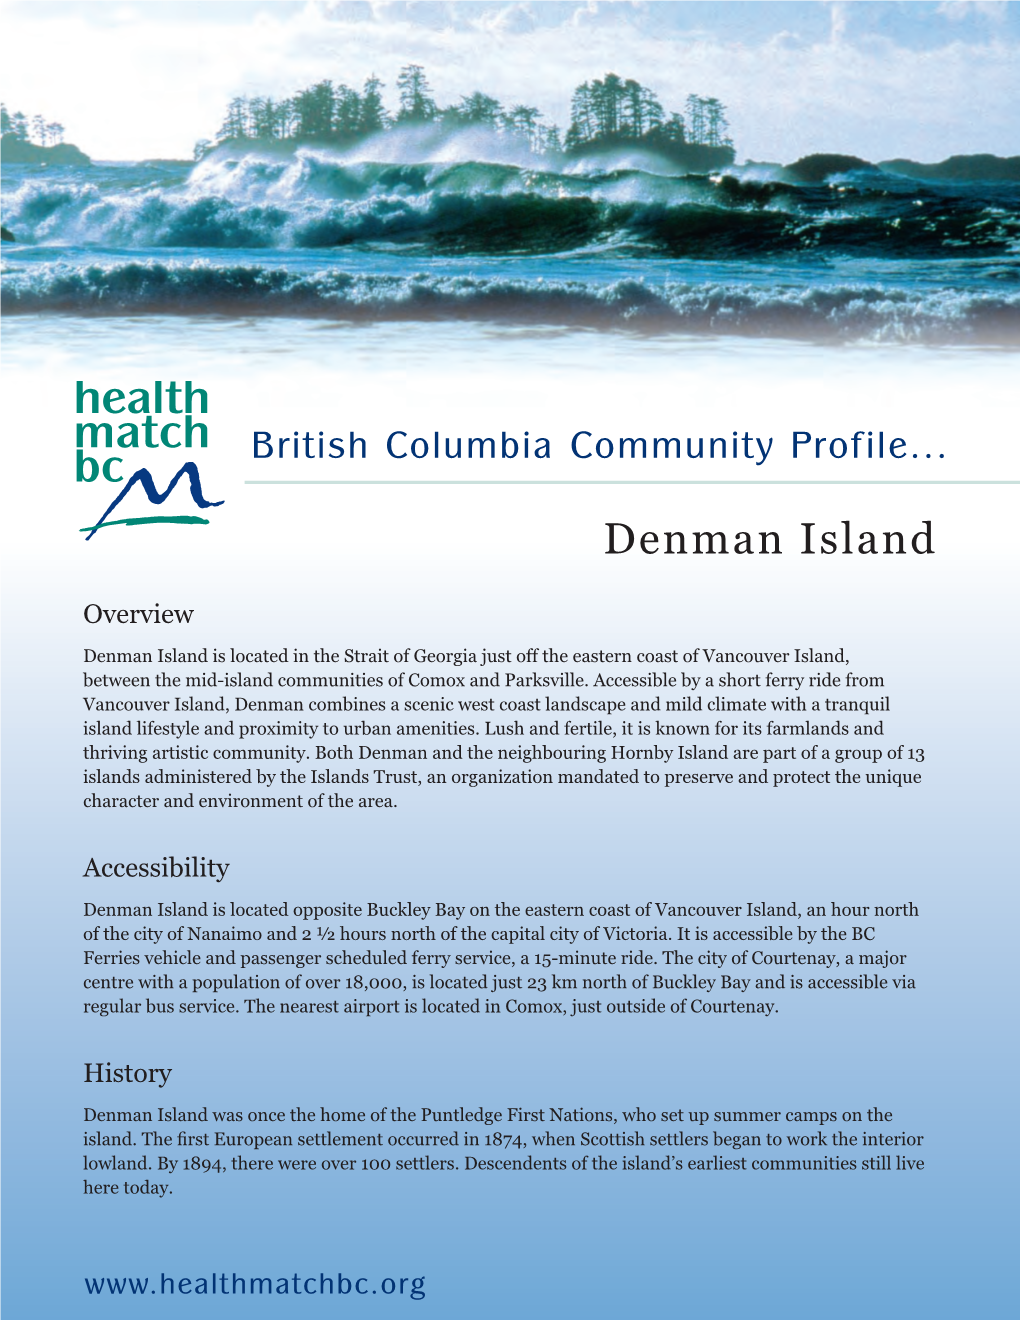 Denman Island Community Profile